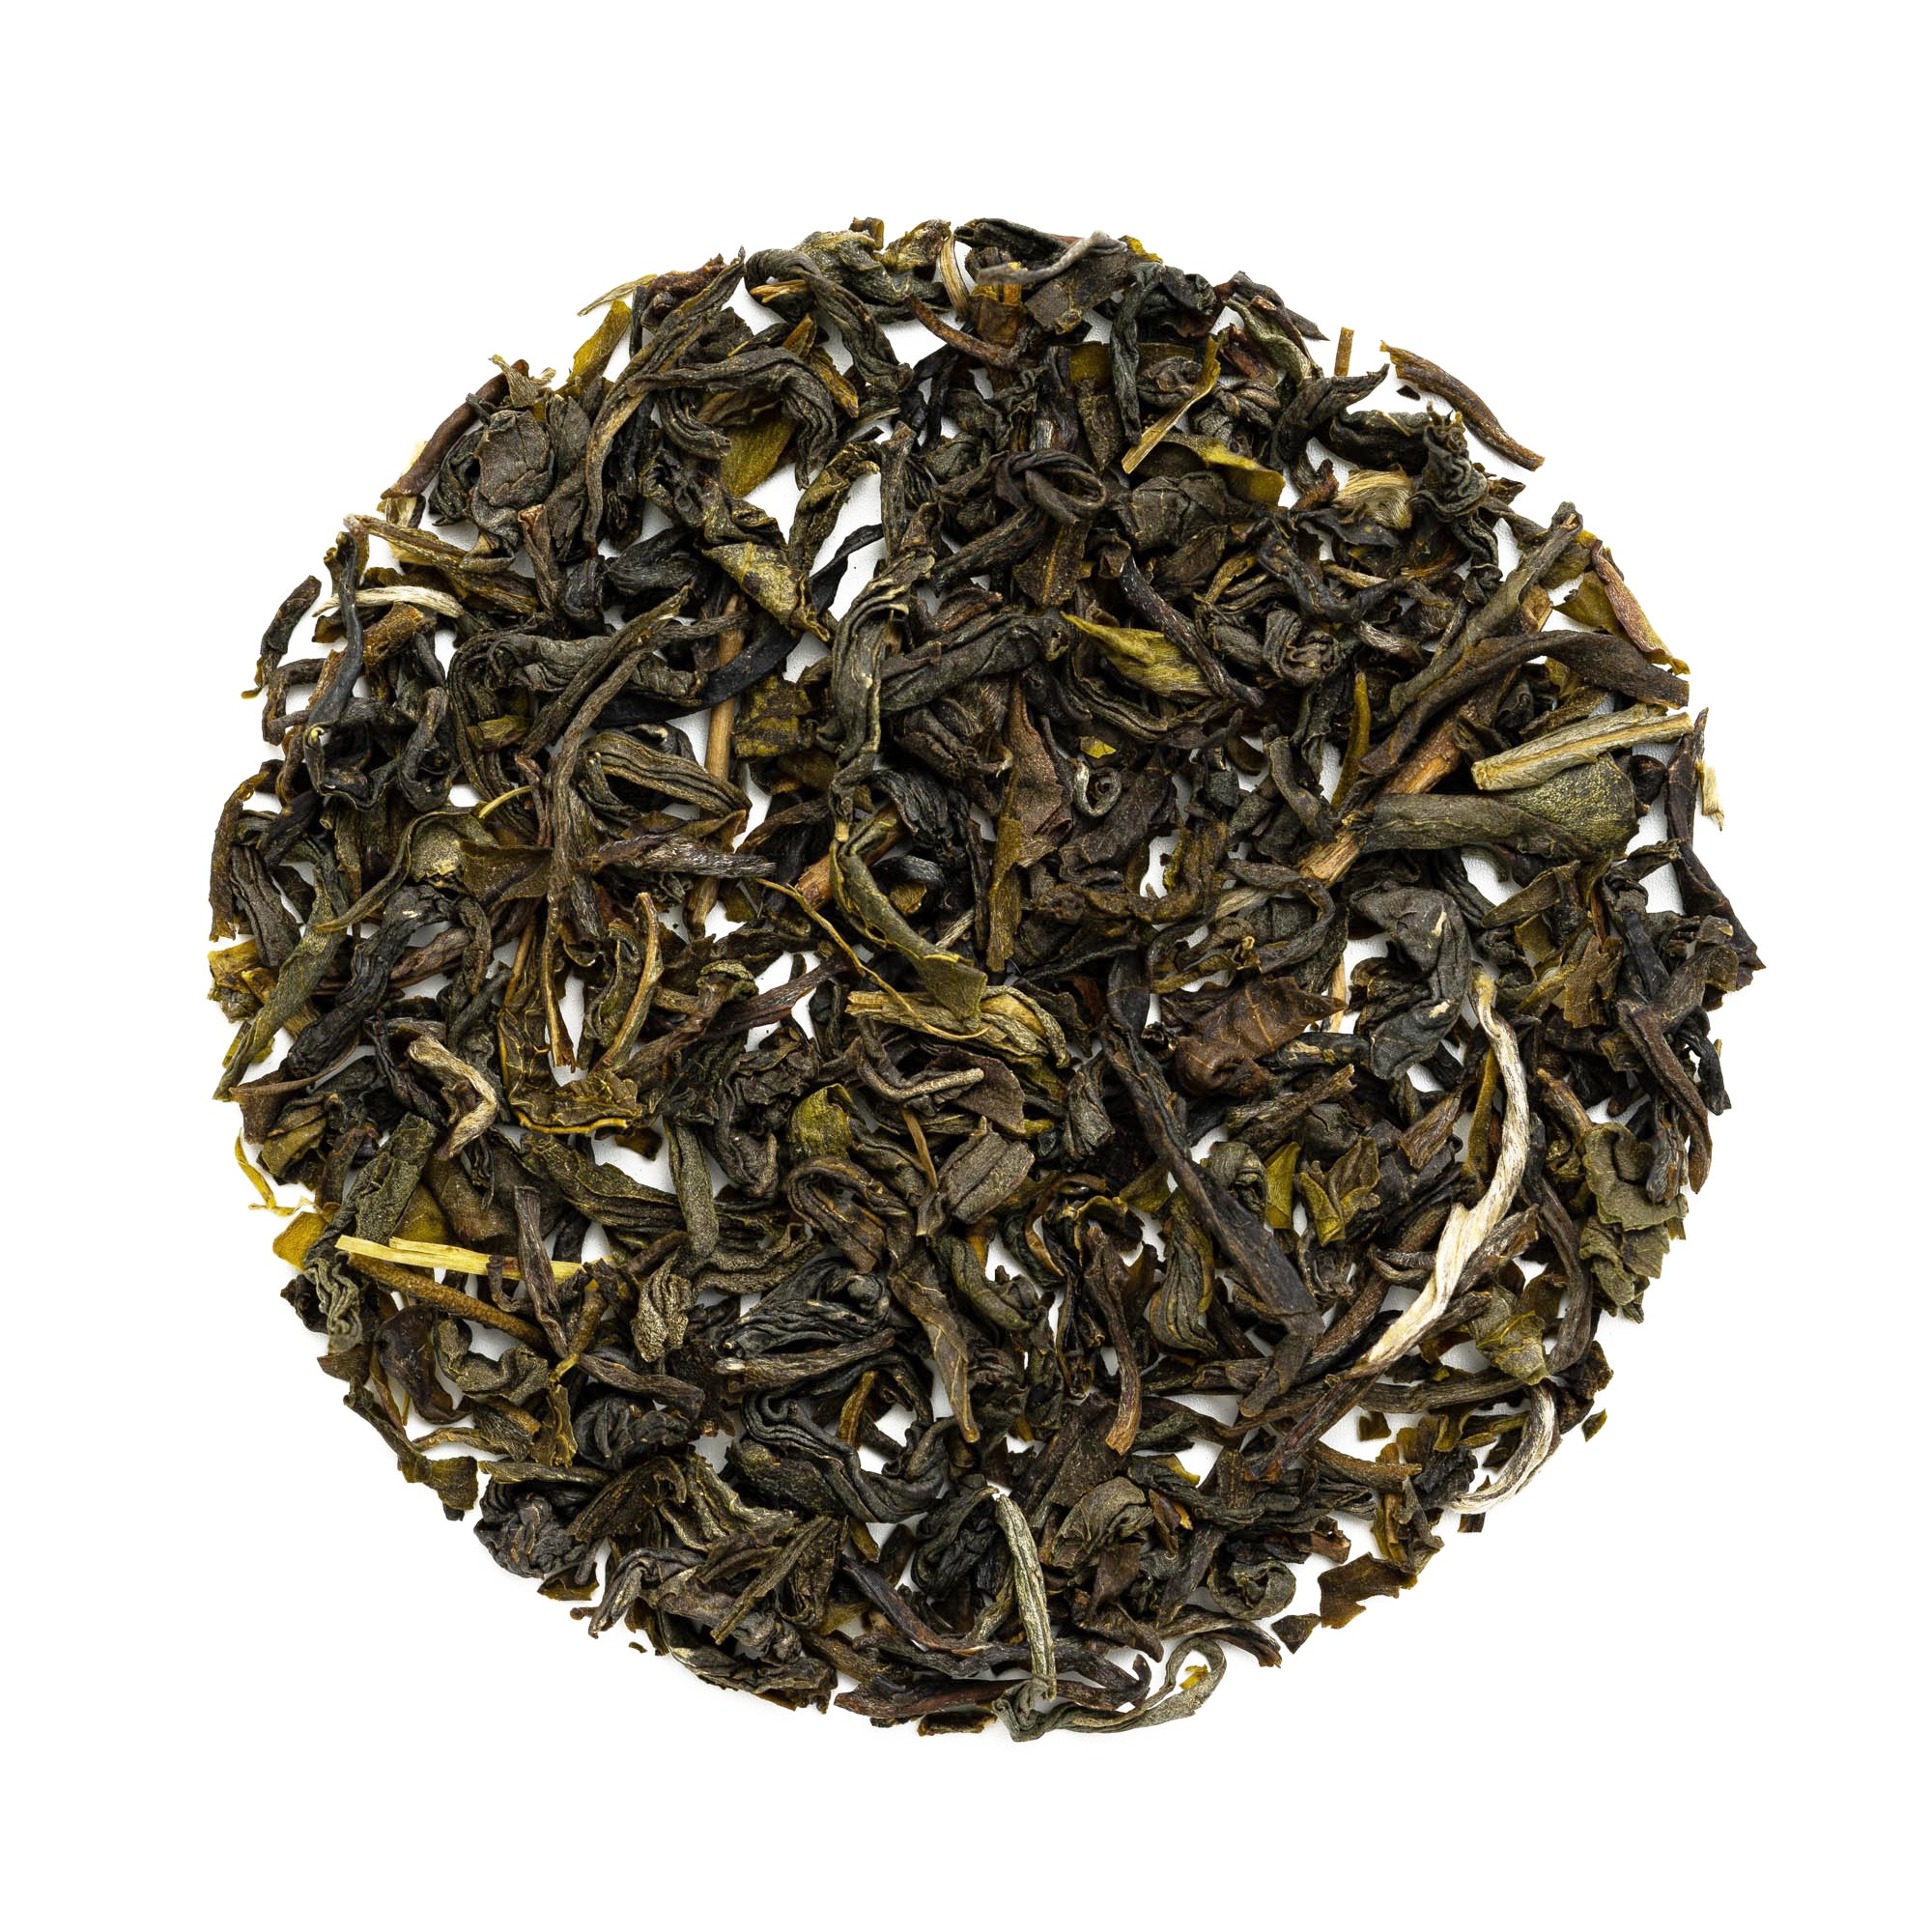 Organic Jasmine Green, Bulk Loose Leaf Green Tea, 16 Oz. - USDA Organic - Single Origin - Premium Organic Loose Leaf Tea - Loose Leaf Green Tea - Heavenly Tea Leaves